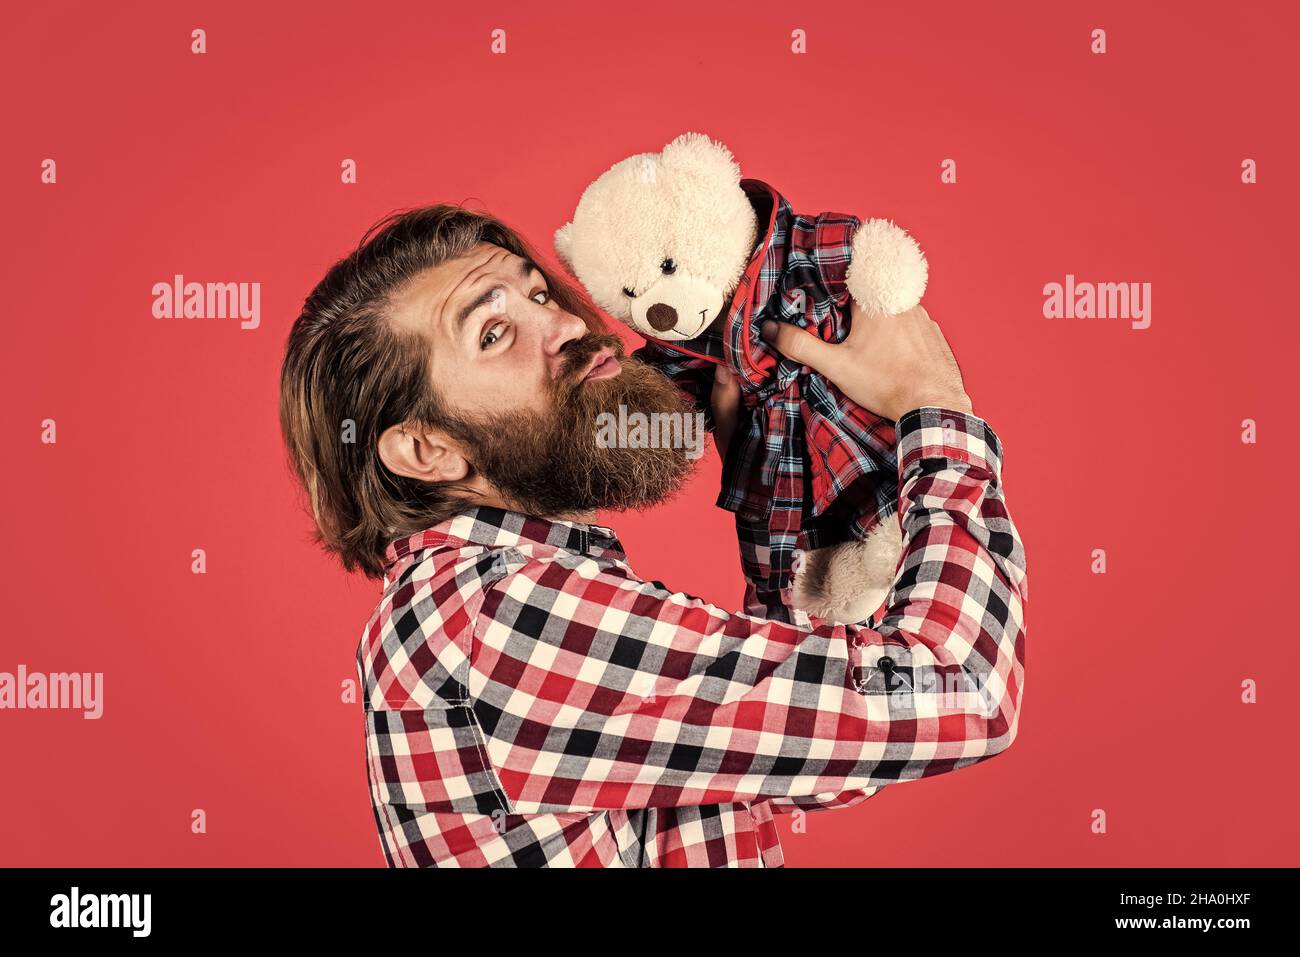 brutal bearded man wear checkered shirt having lush beard and moustache kiss teddy bear toy, love Stock Photo